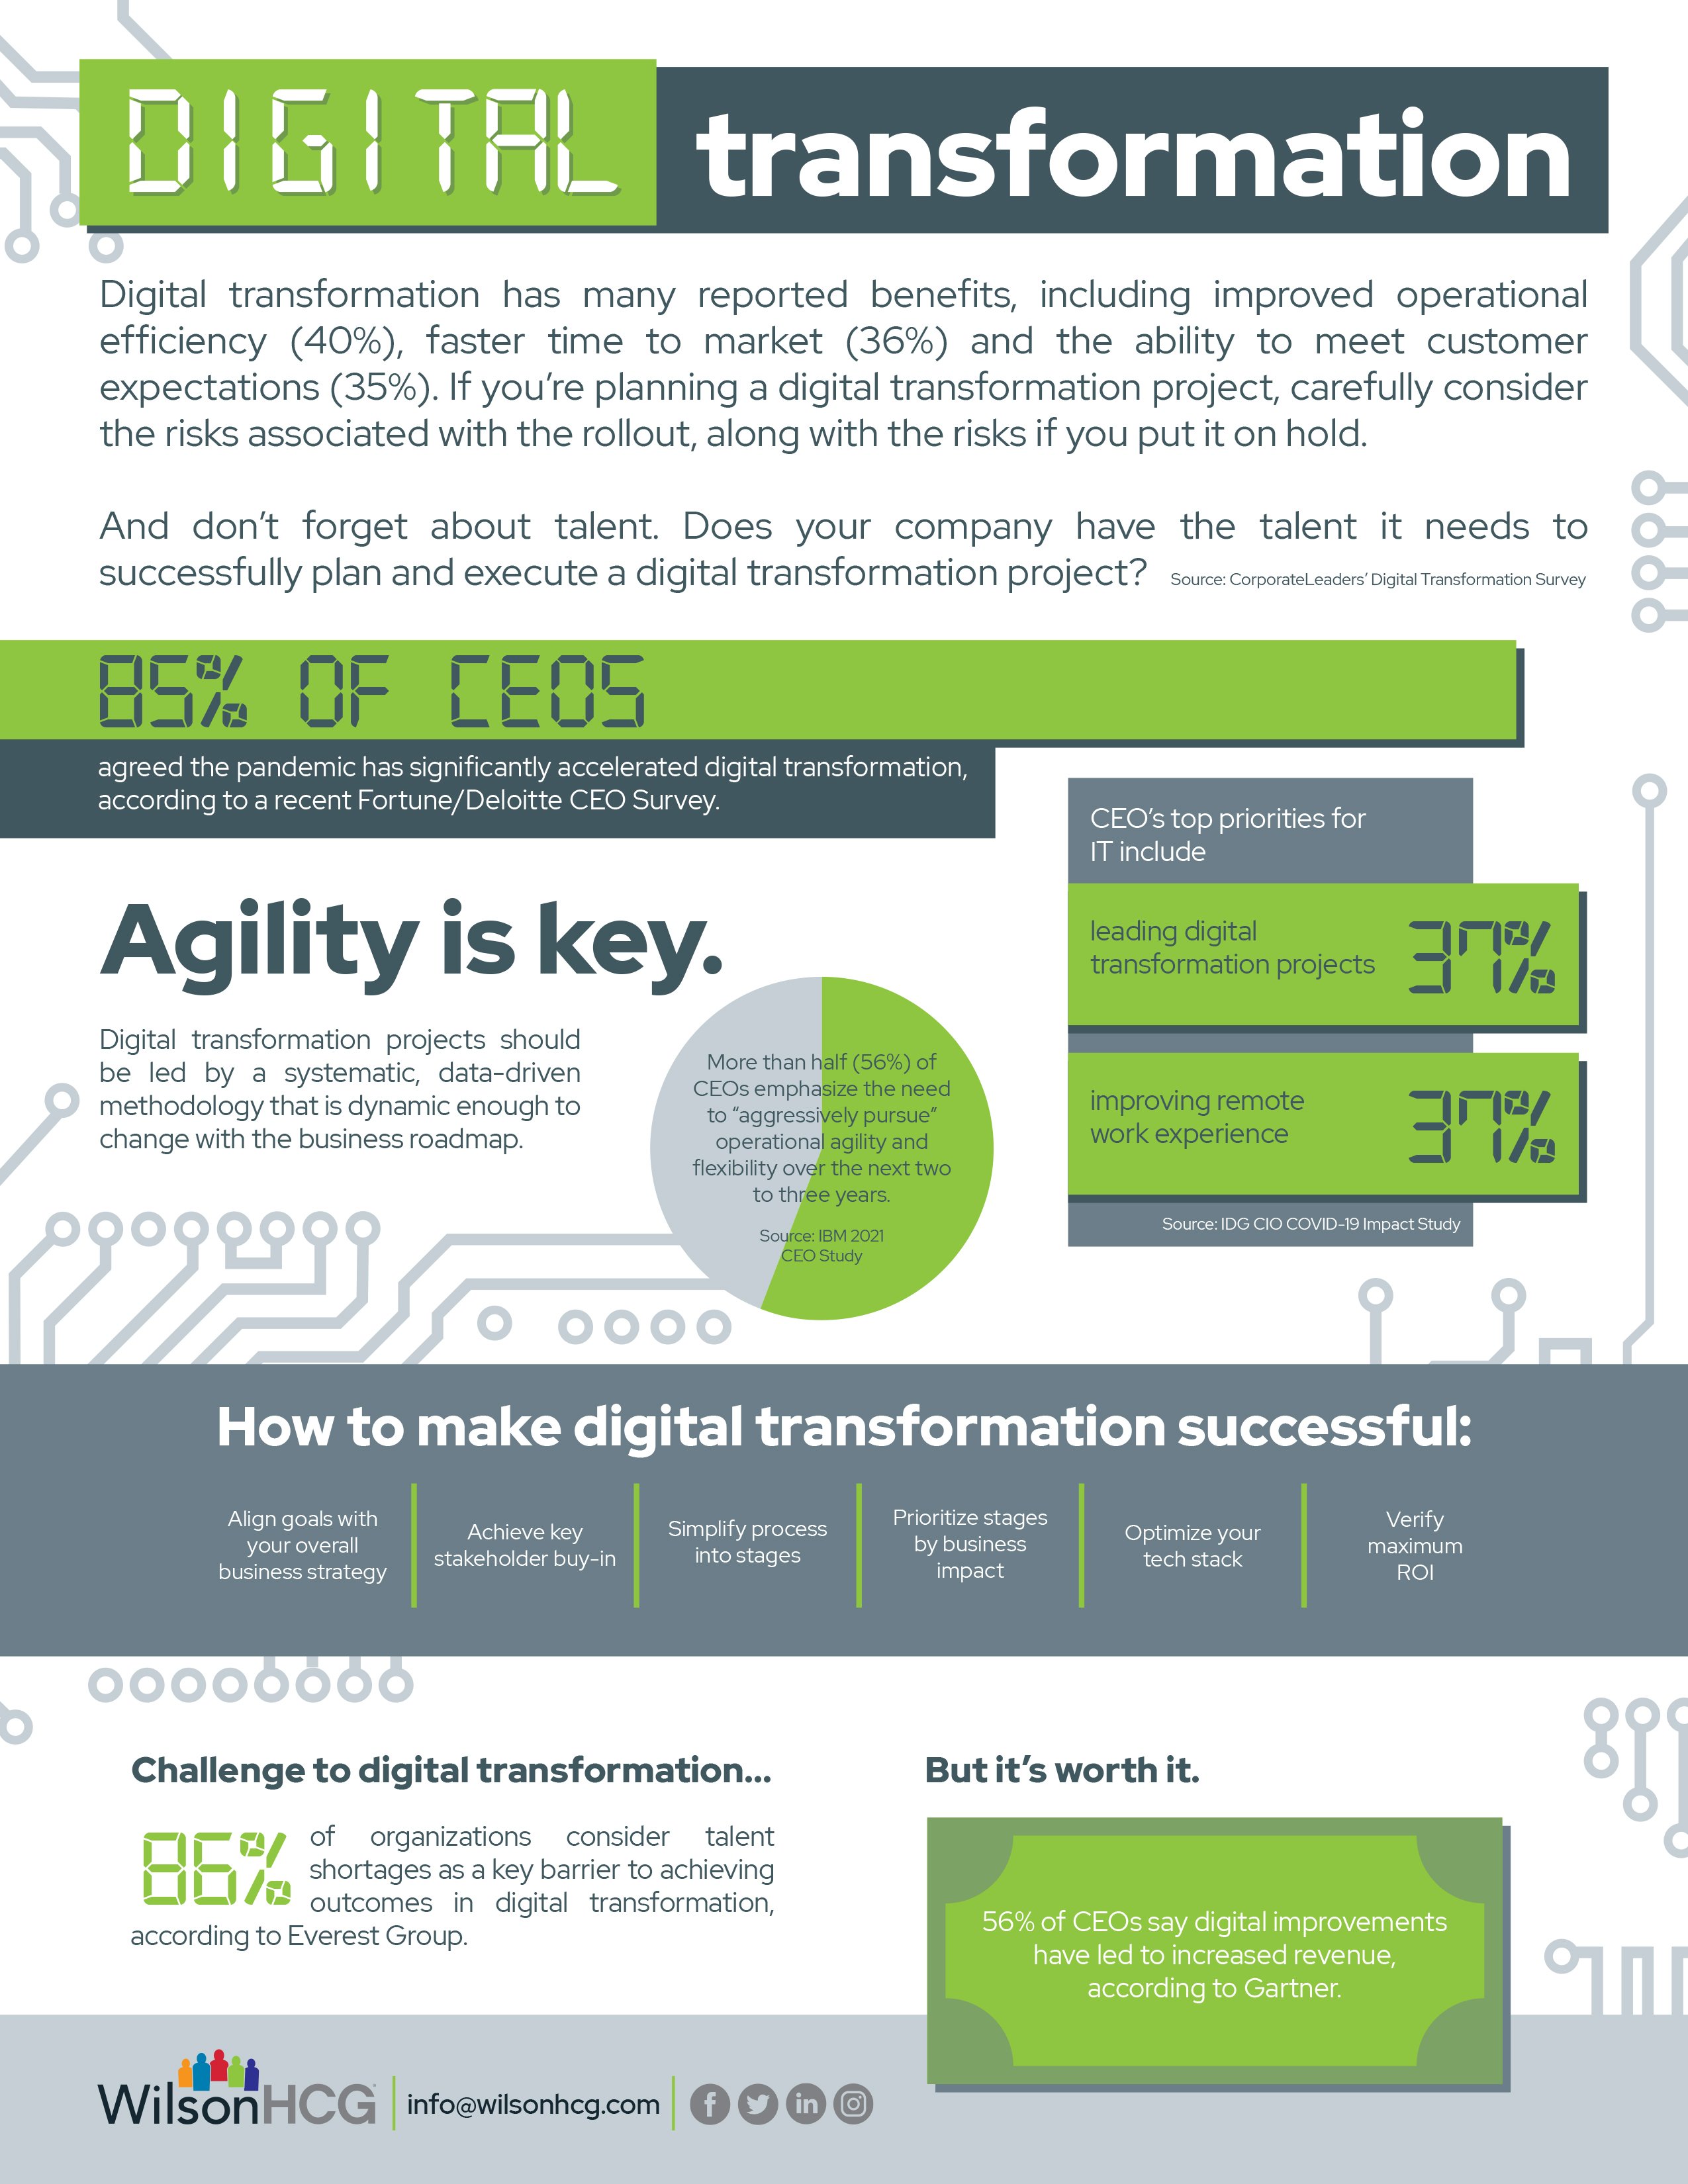 DigitalTransformation-infographic